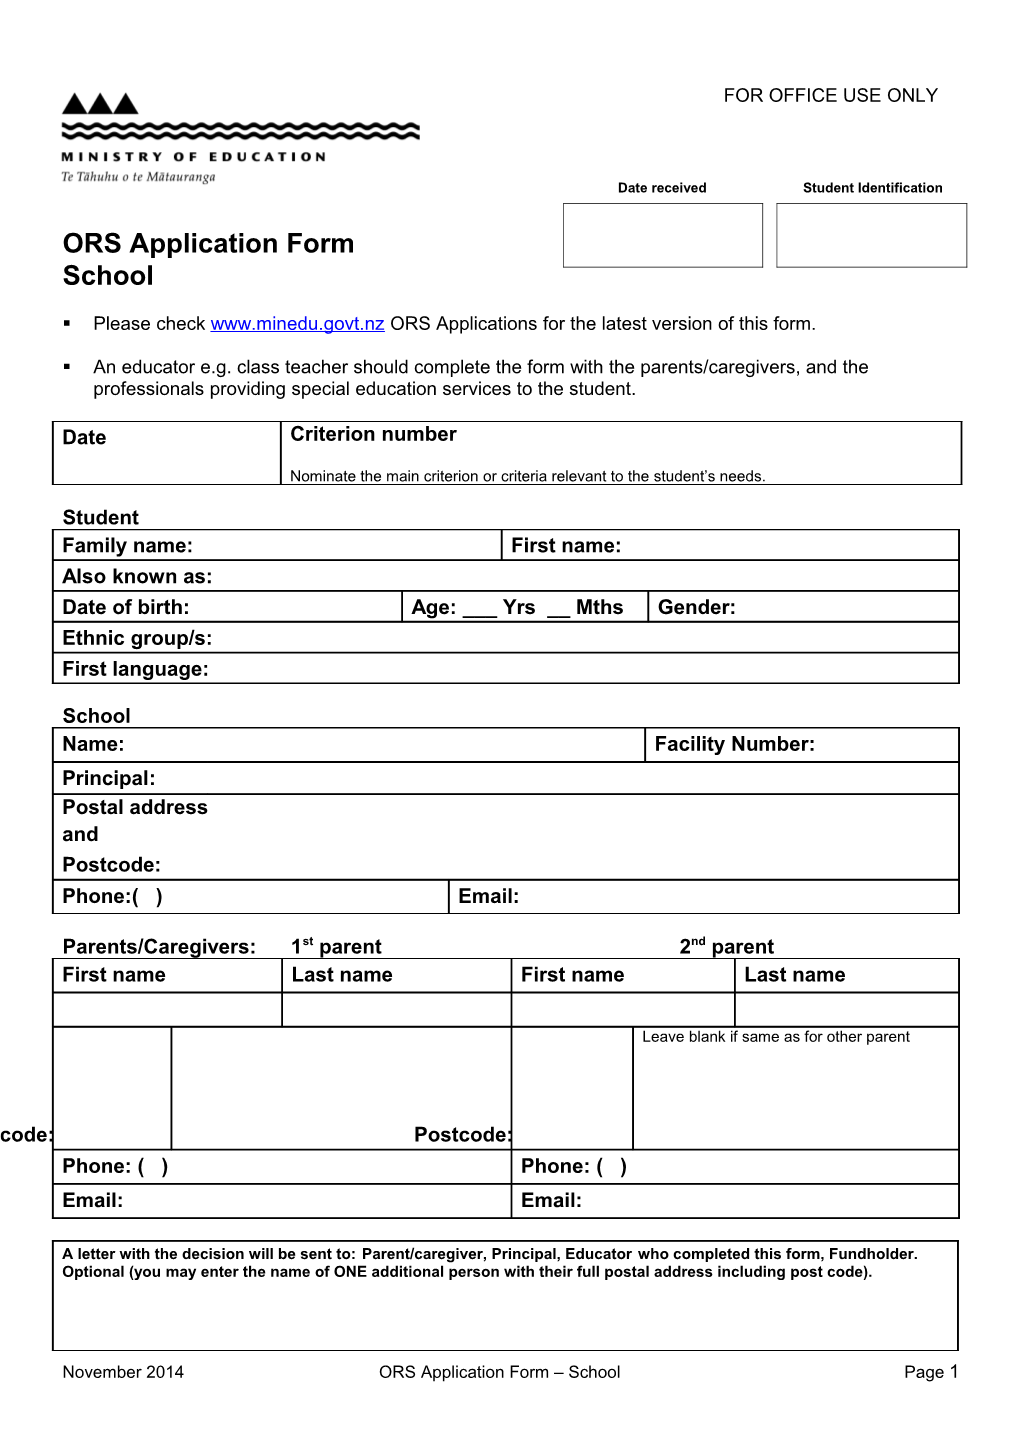 ORS Application Form School July 2011